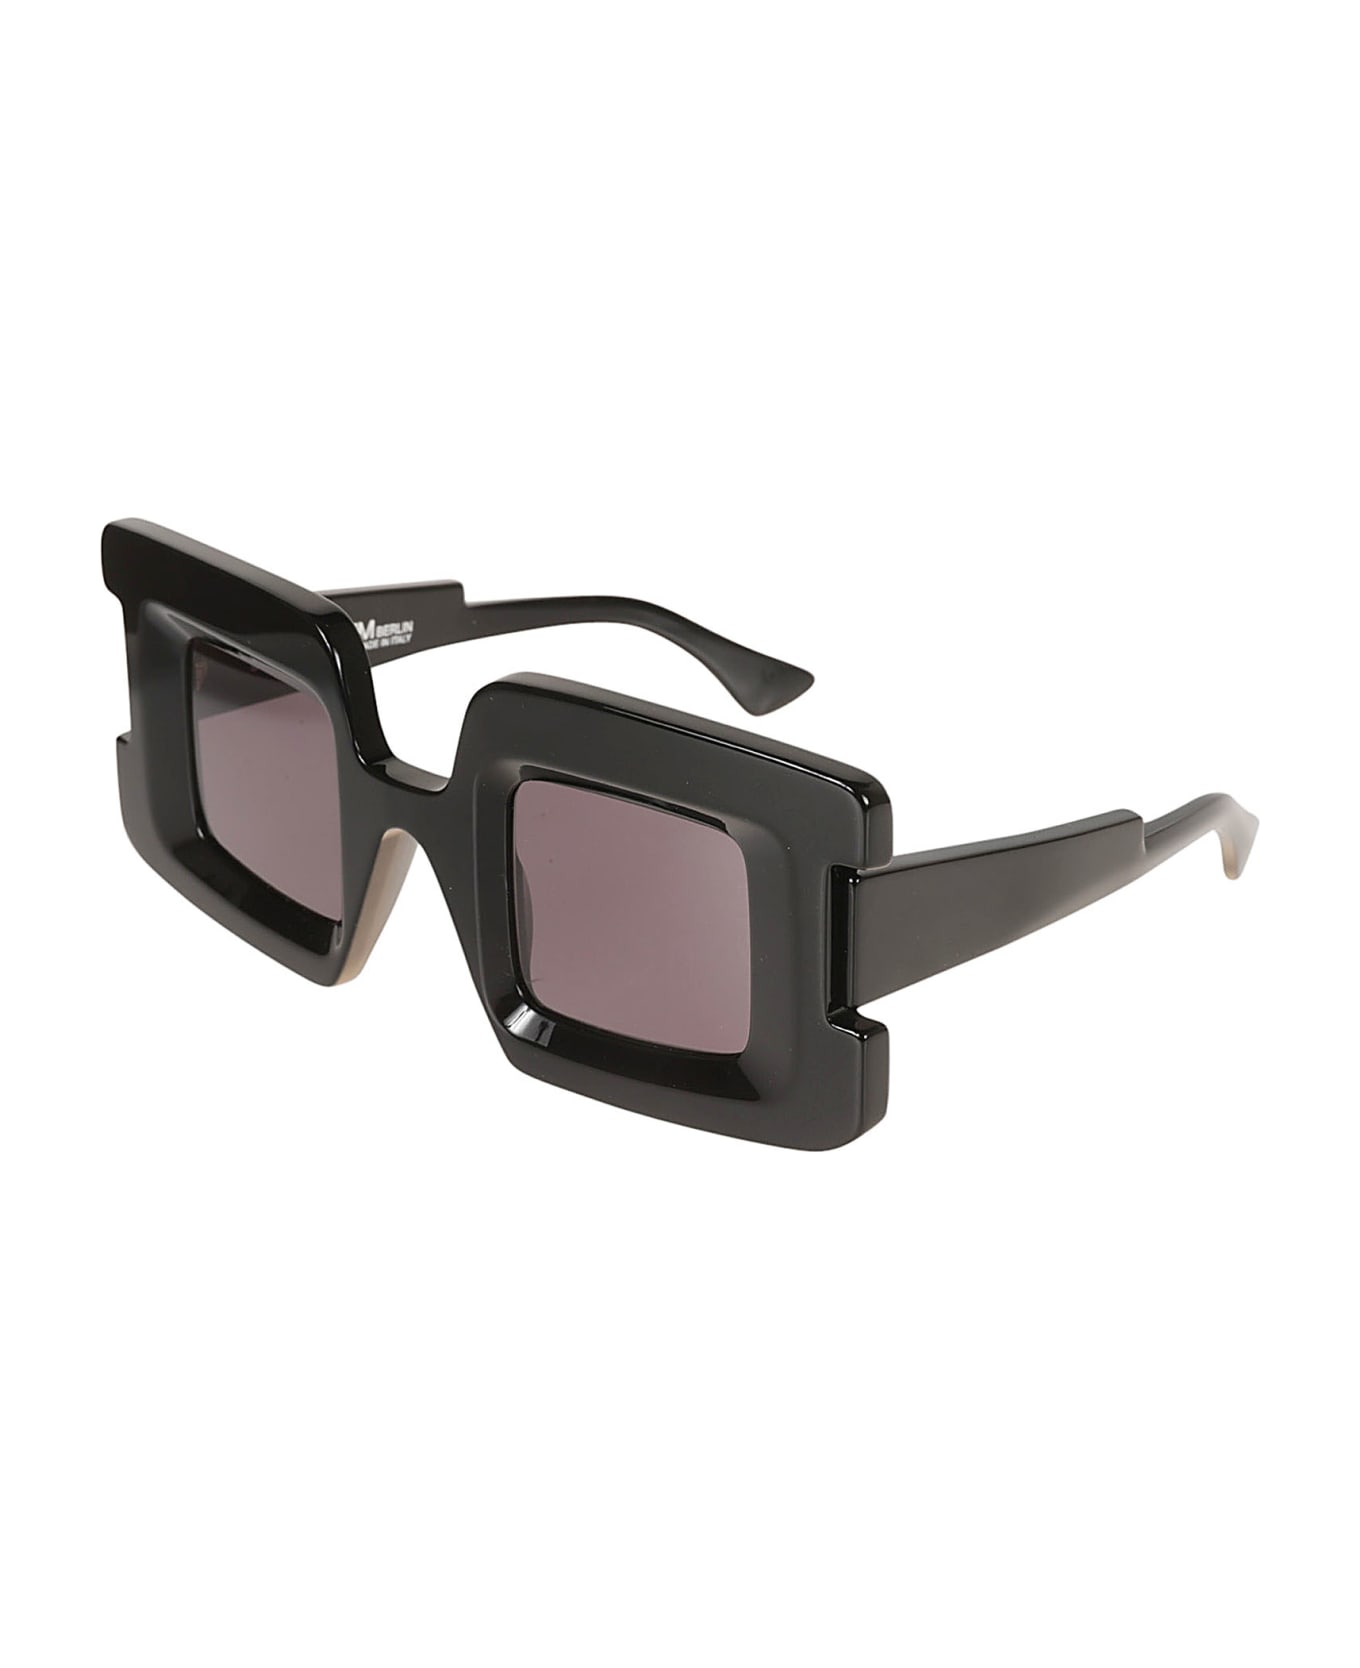 Kuboraum Thick Square Sunglasses Men - Black